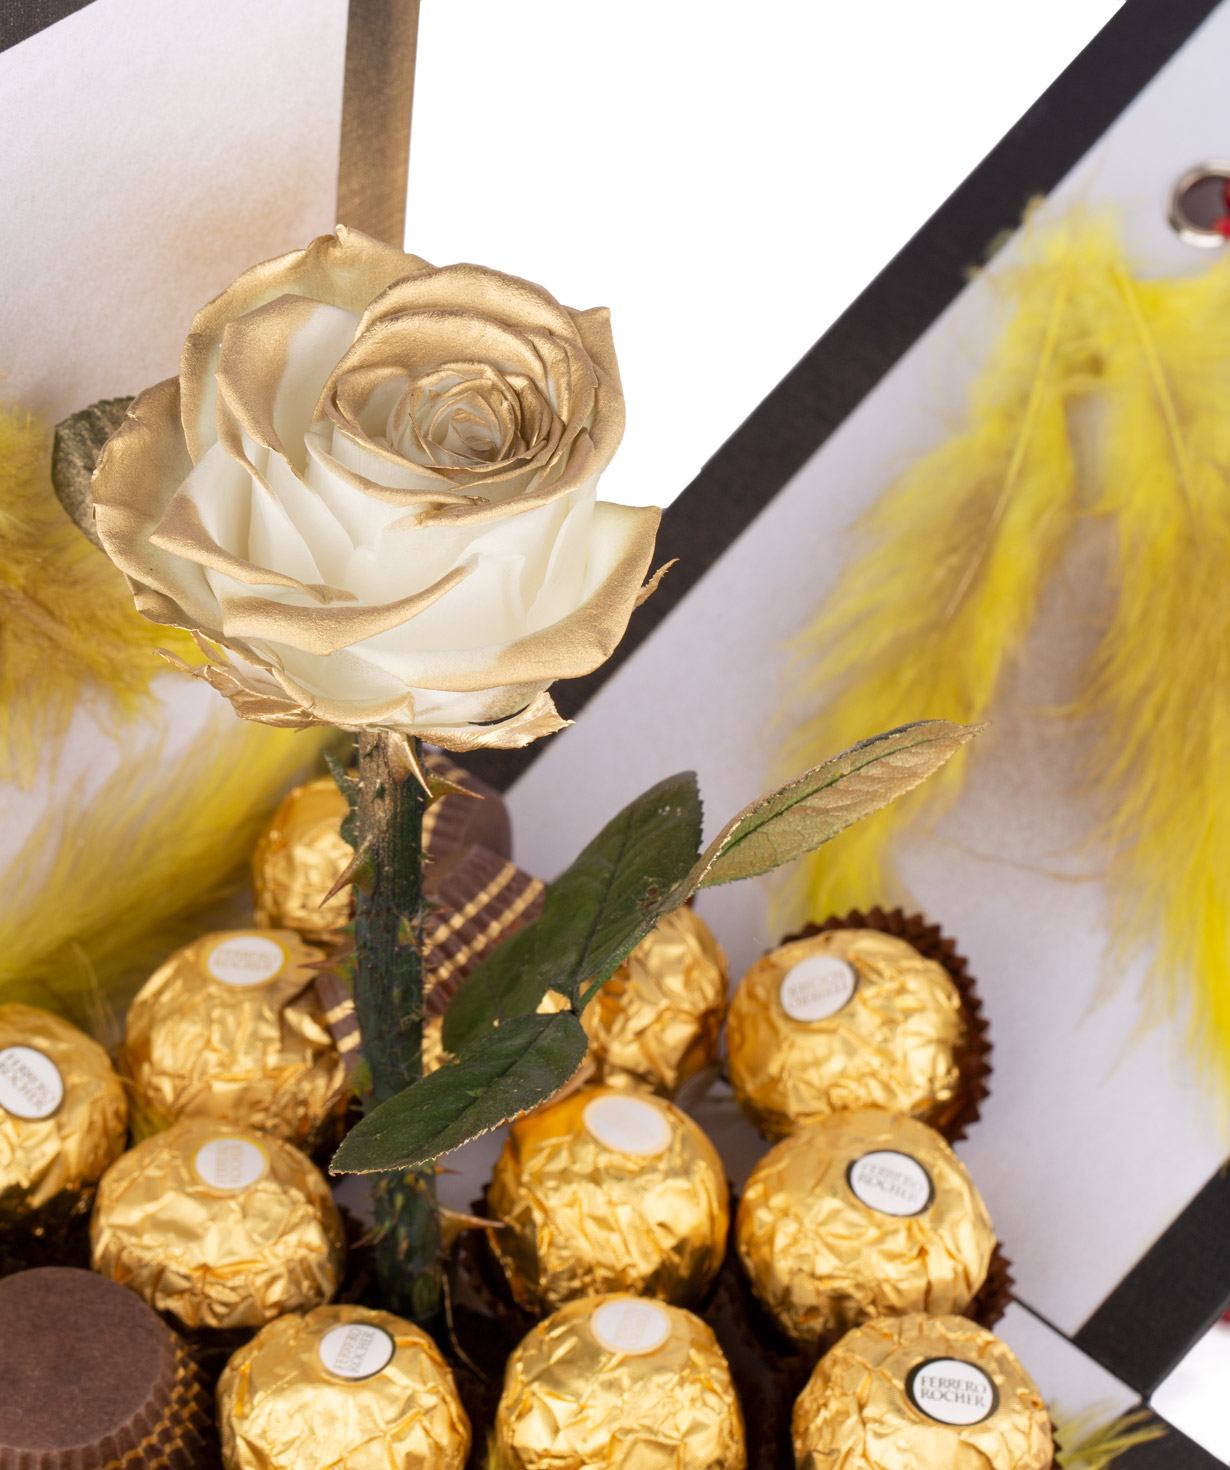 Rose `EM Flowers` golden eternal with candies